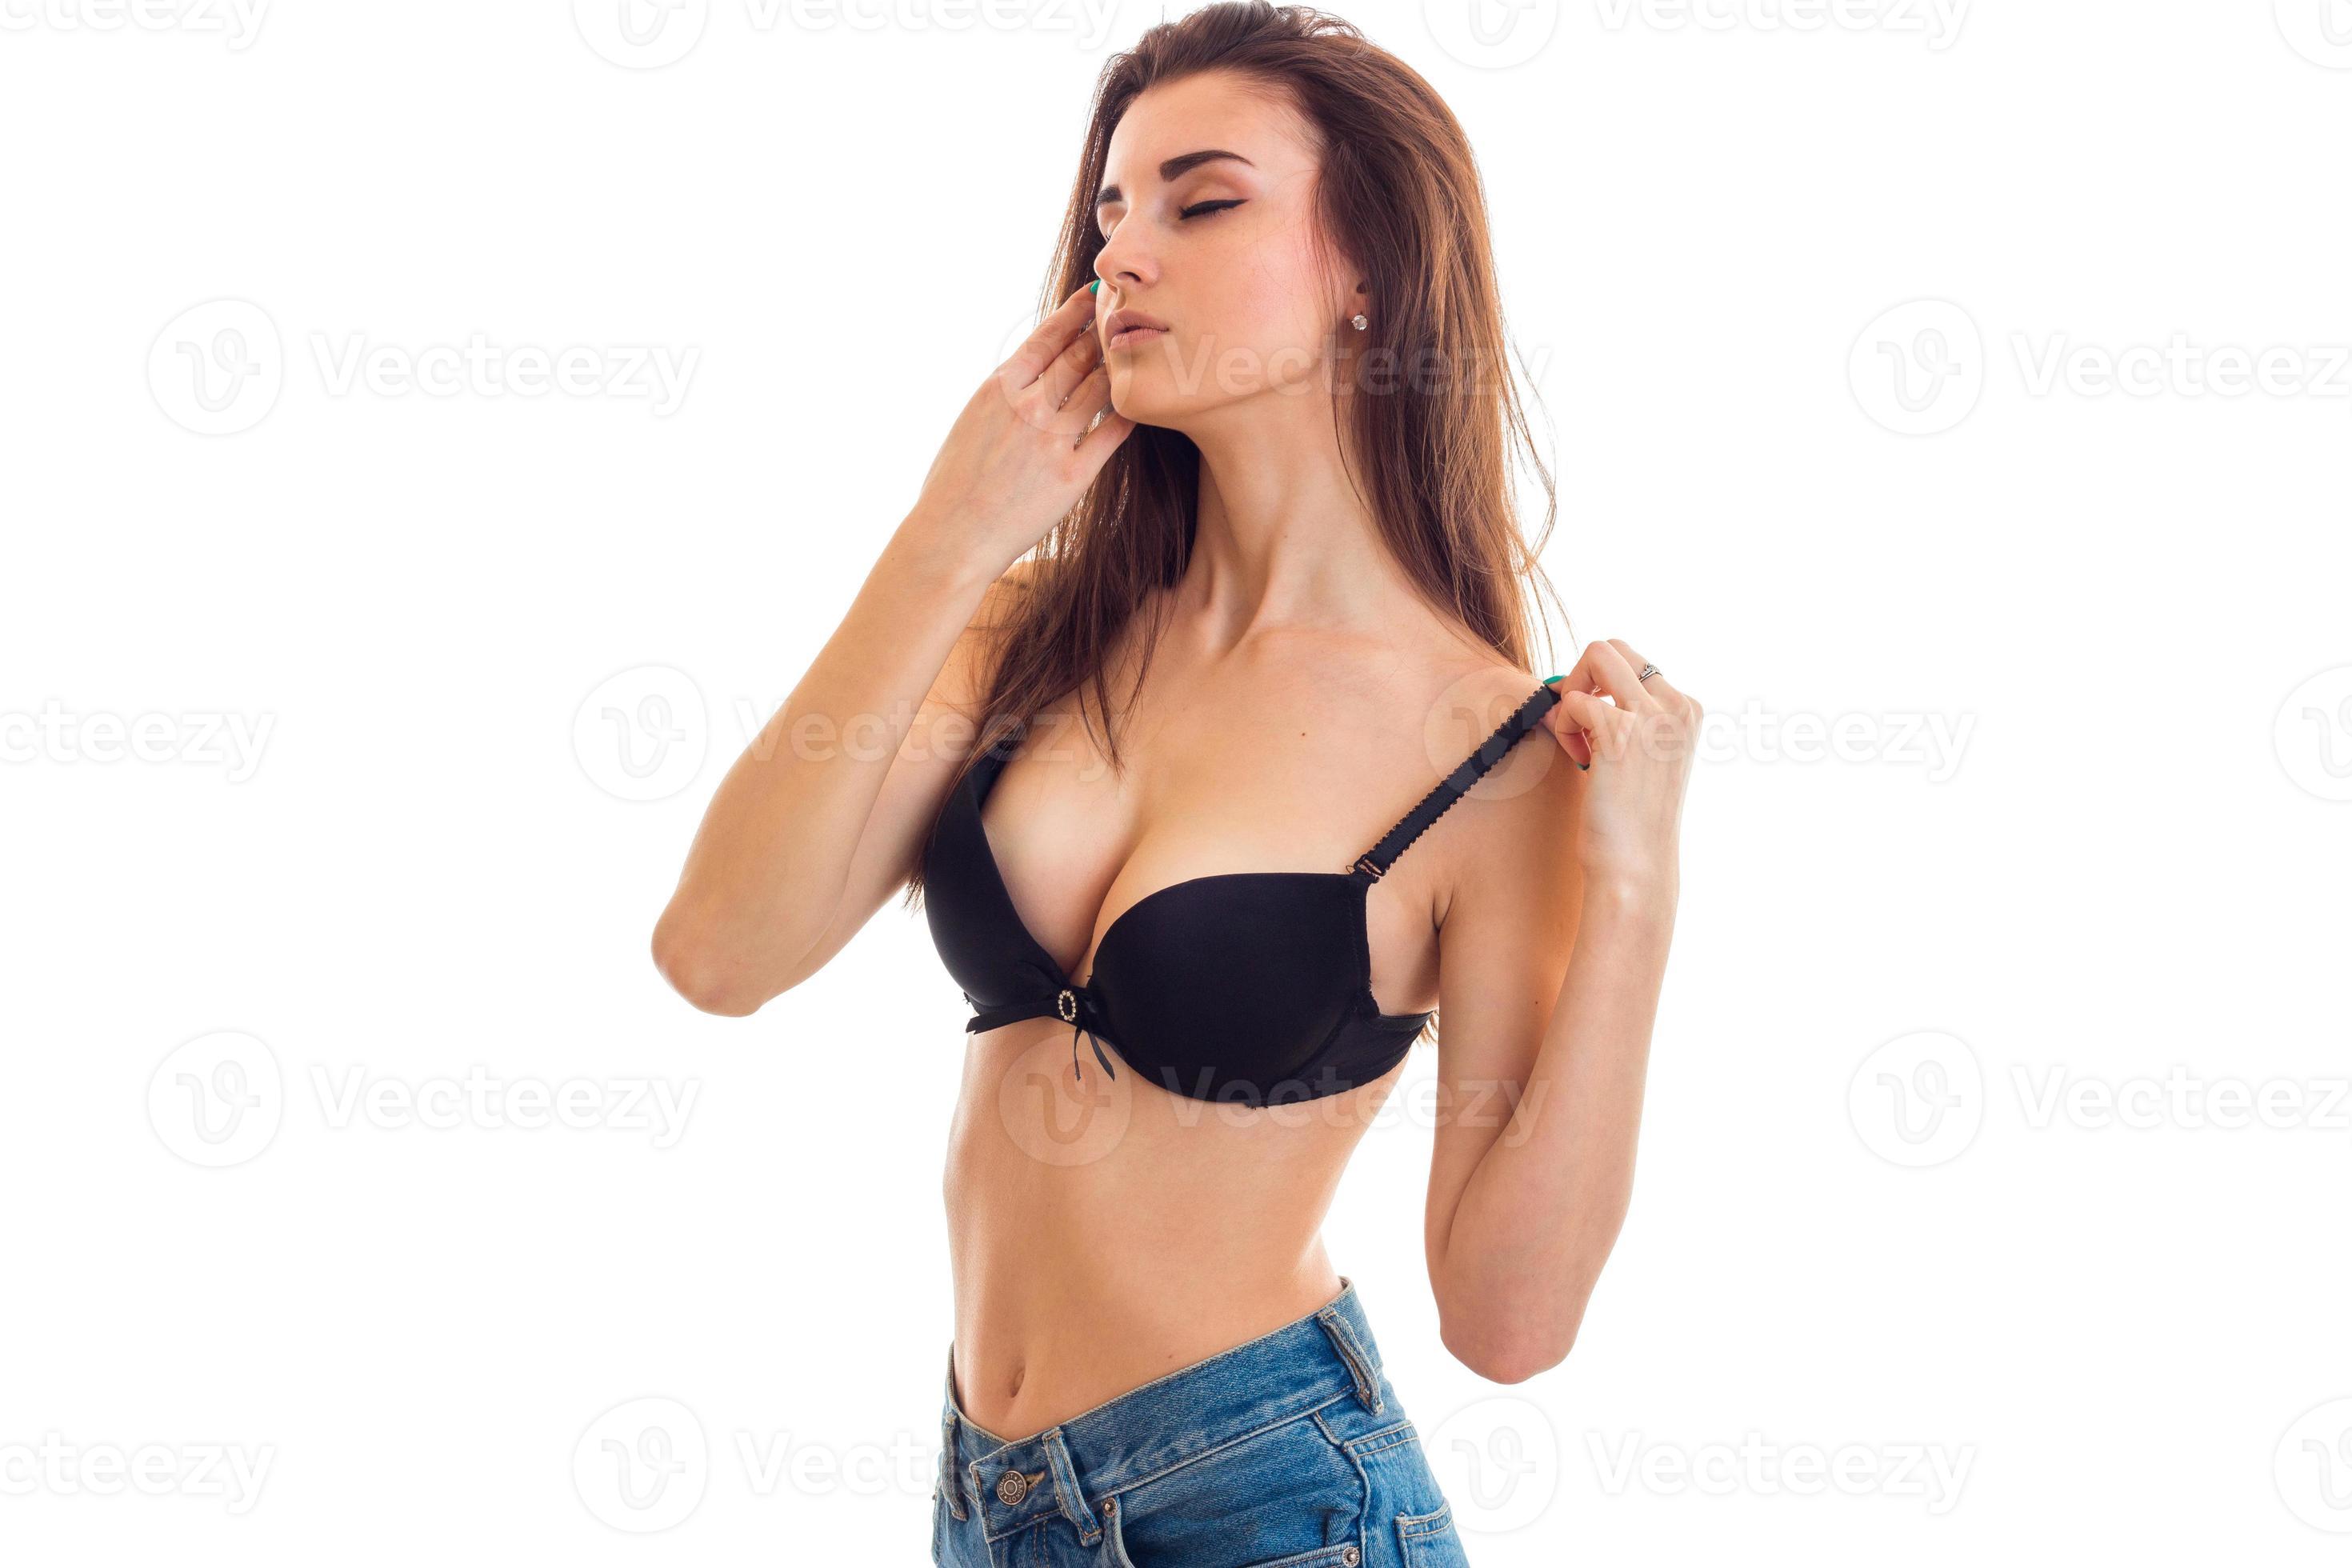 dena bowers share hot women taking off bra photos